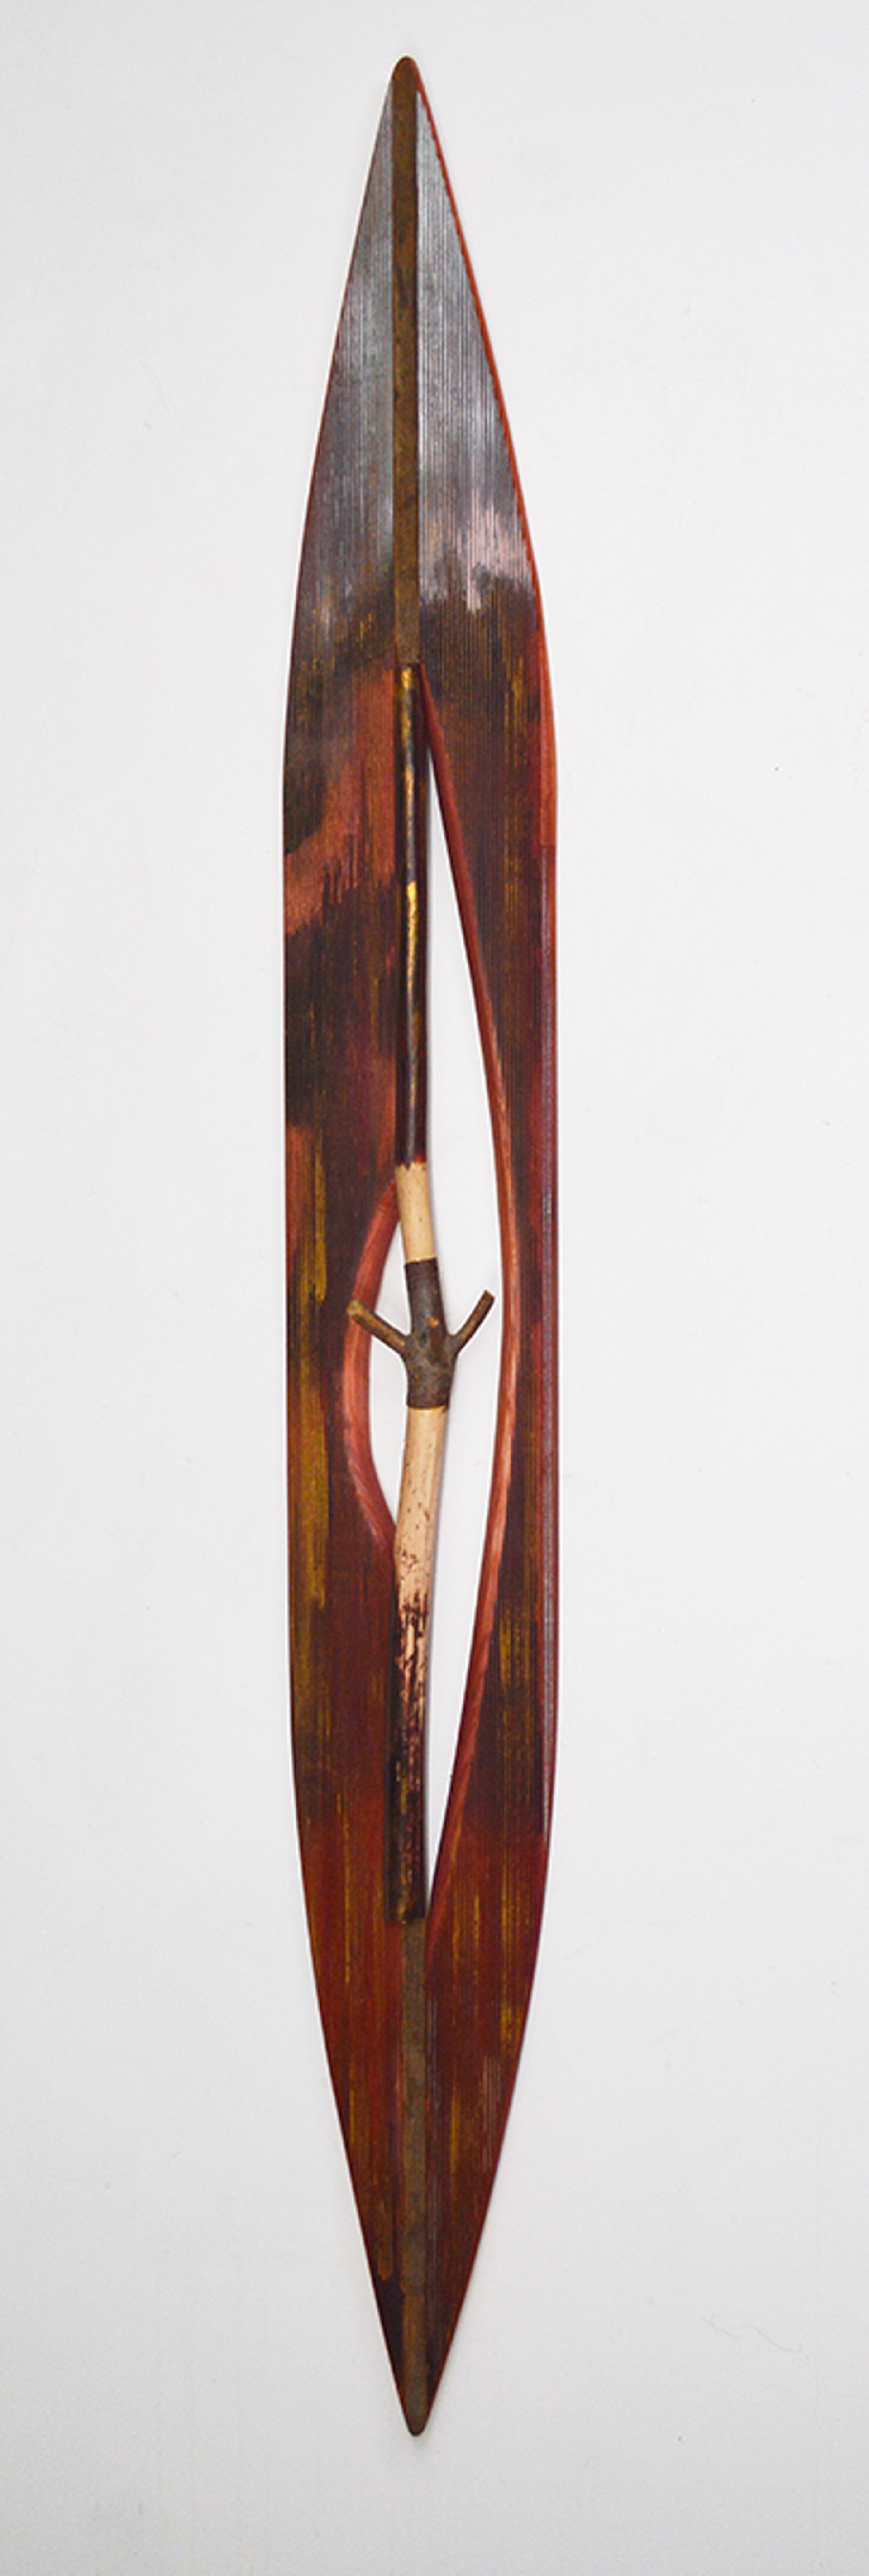 Dorothy's Stick, 75 by Melinda Rosenberg